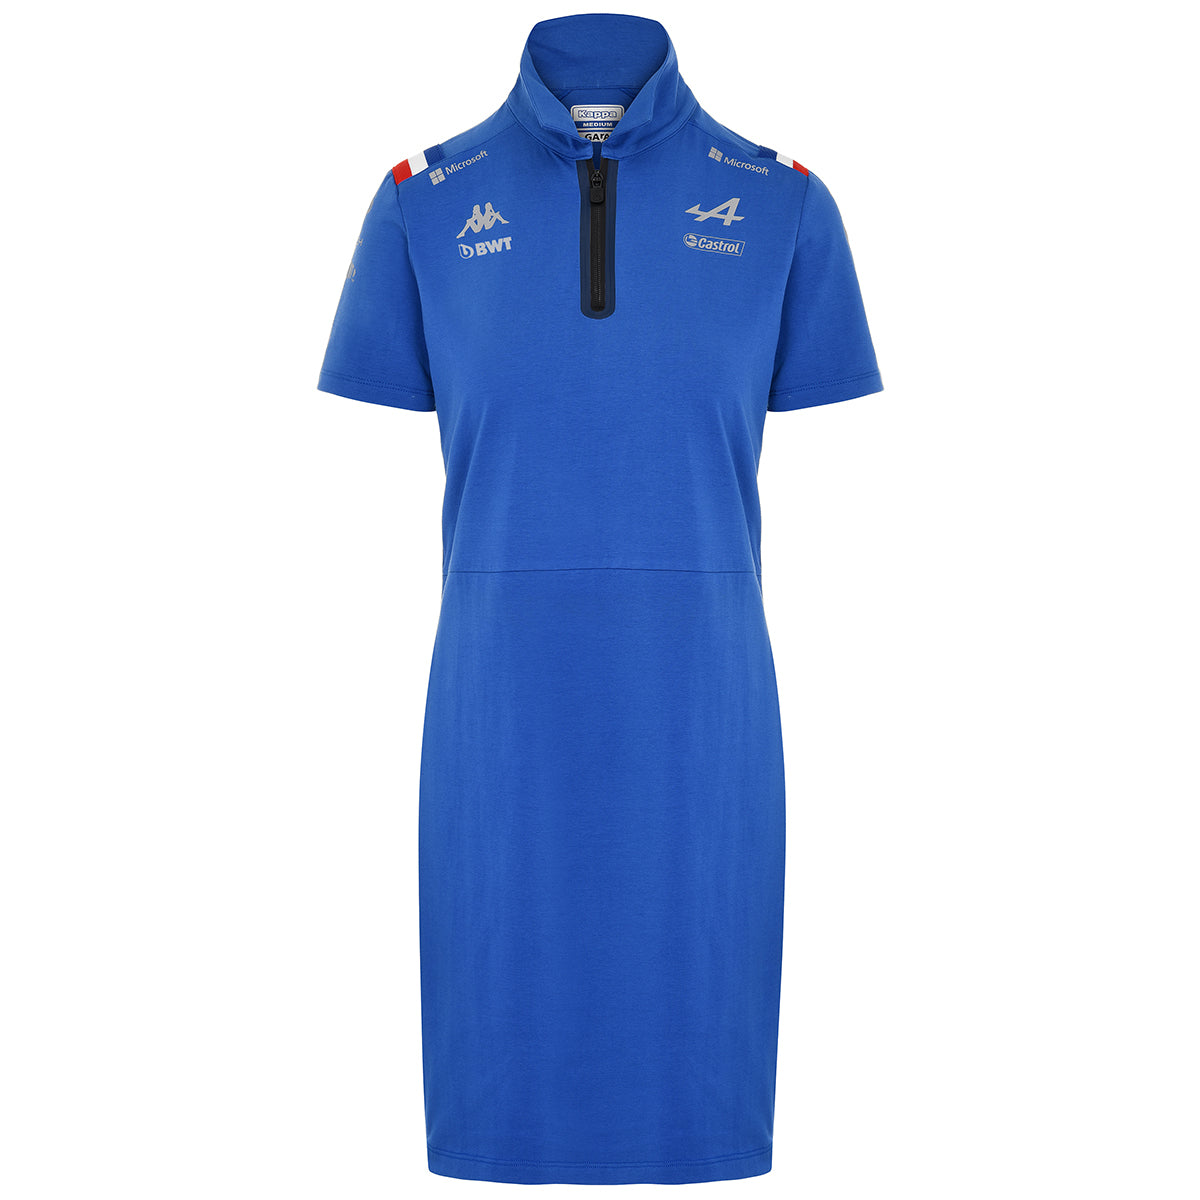 ALPINE F1 Team Dress Blue Royal Marine Lady